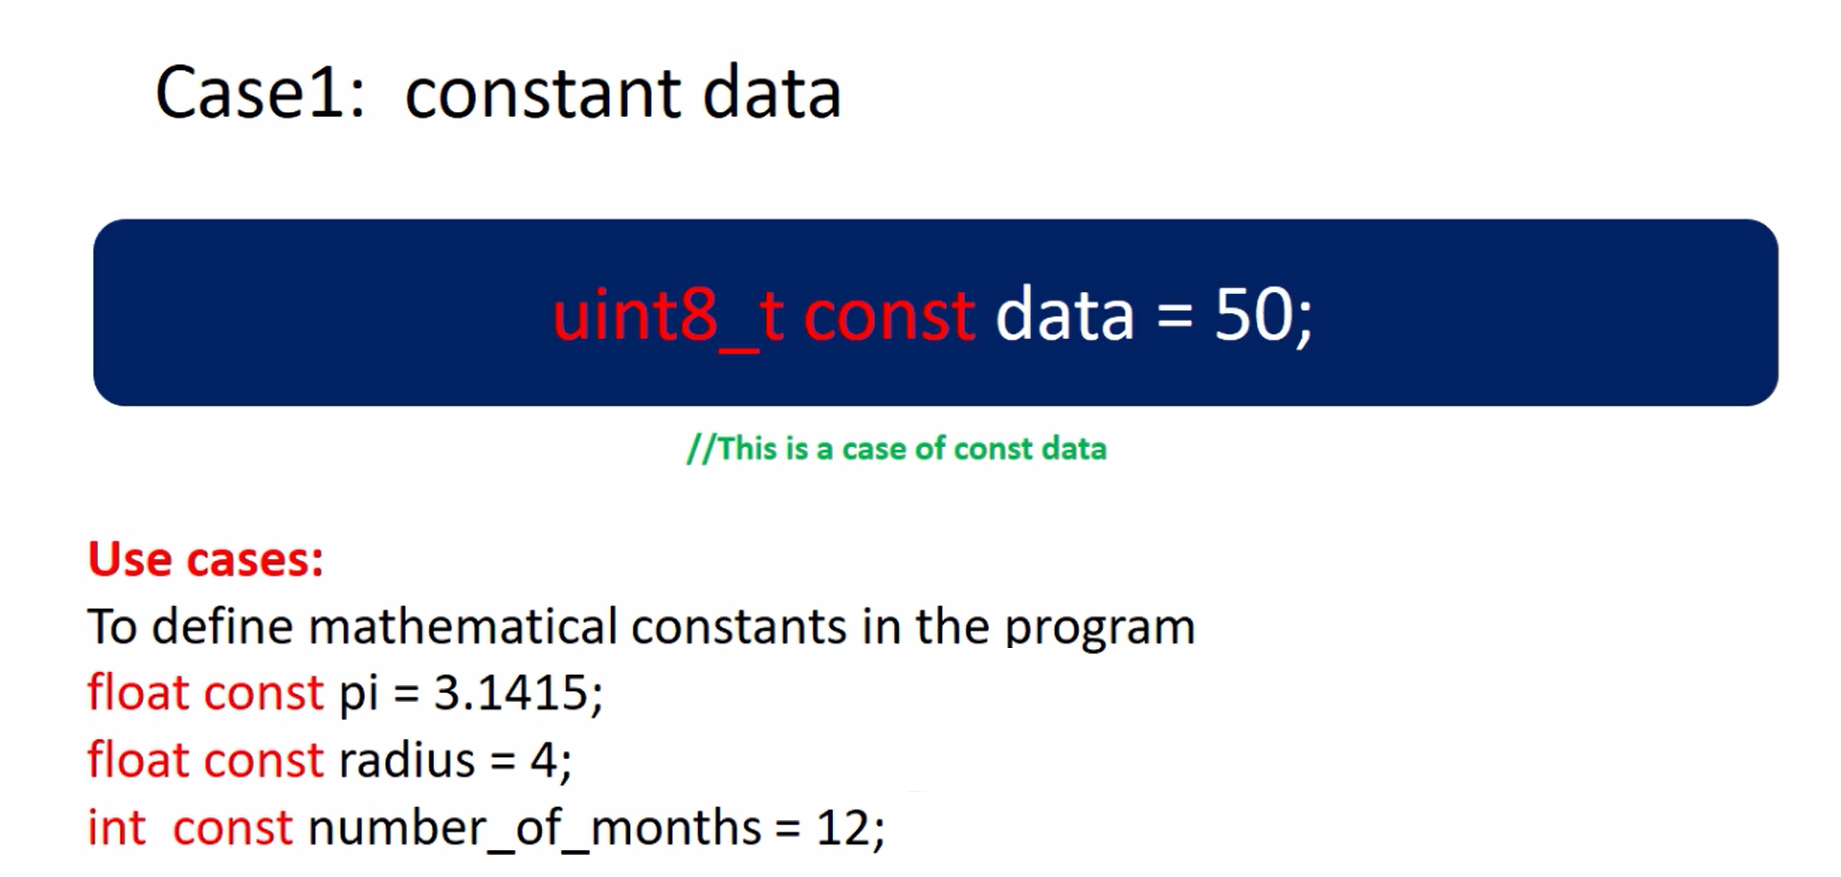 Figure 1. Case 1: Constant data